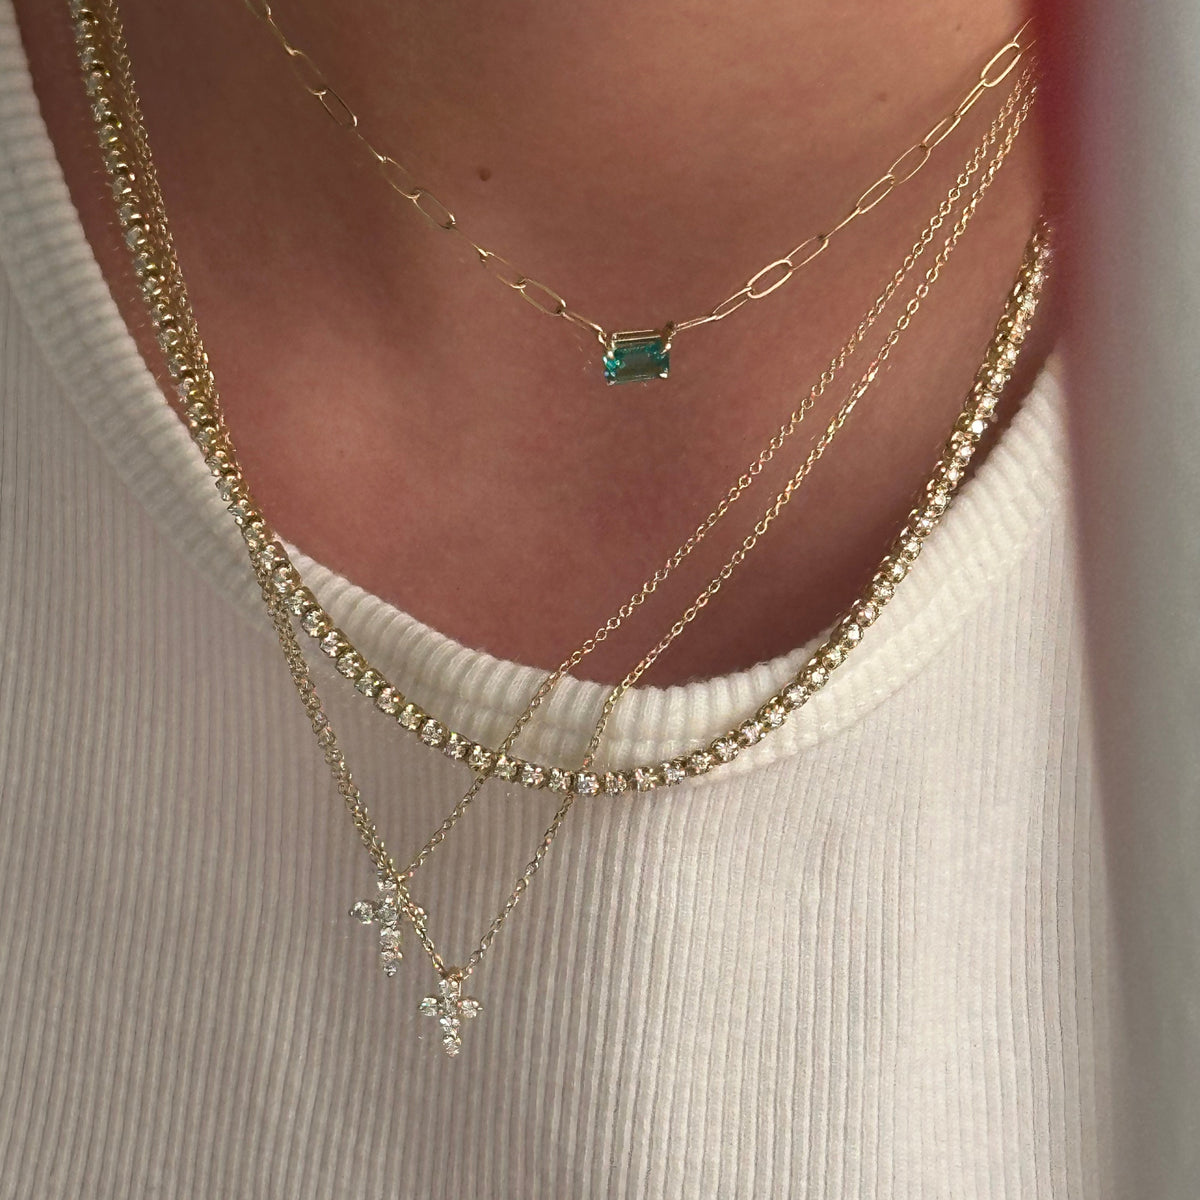 Little Cross Diamond Necklace